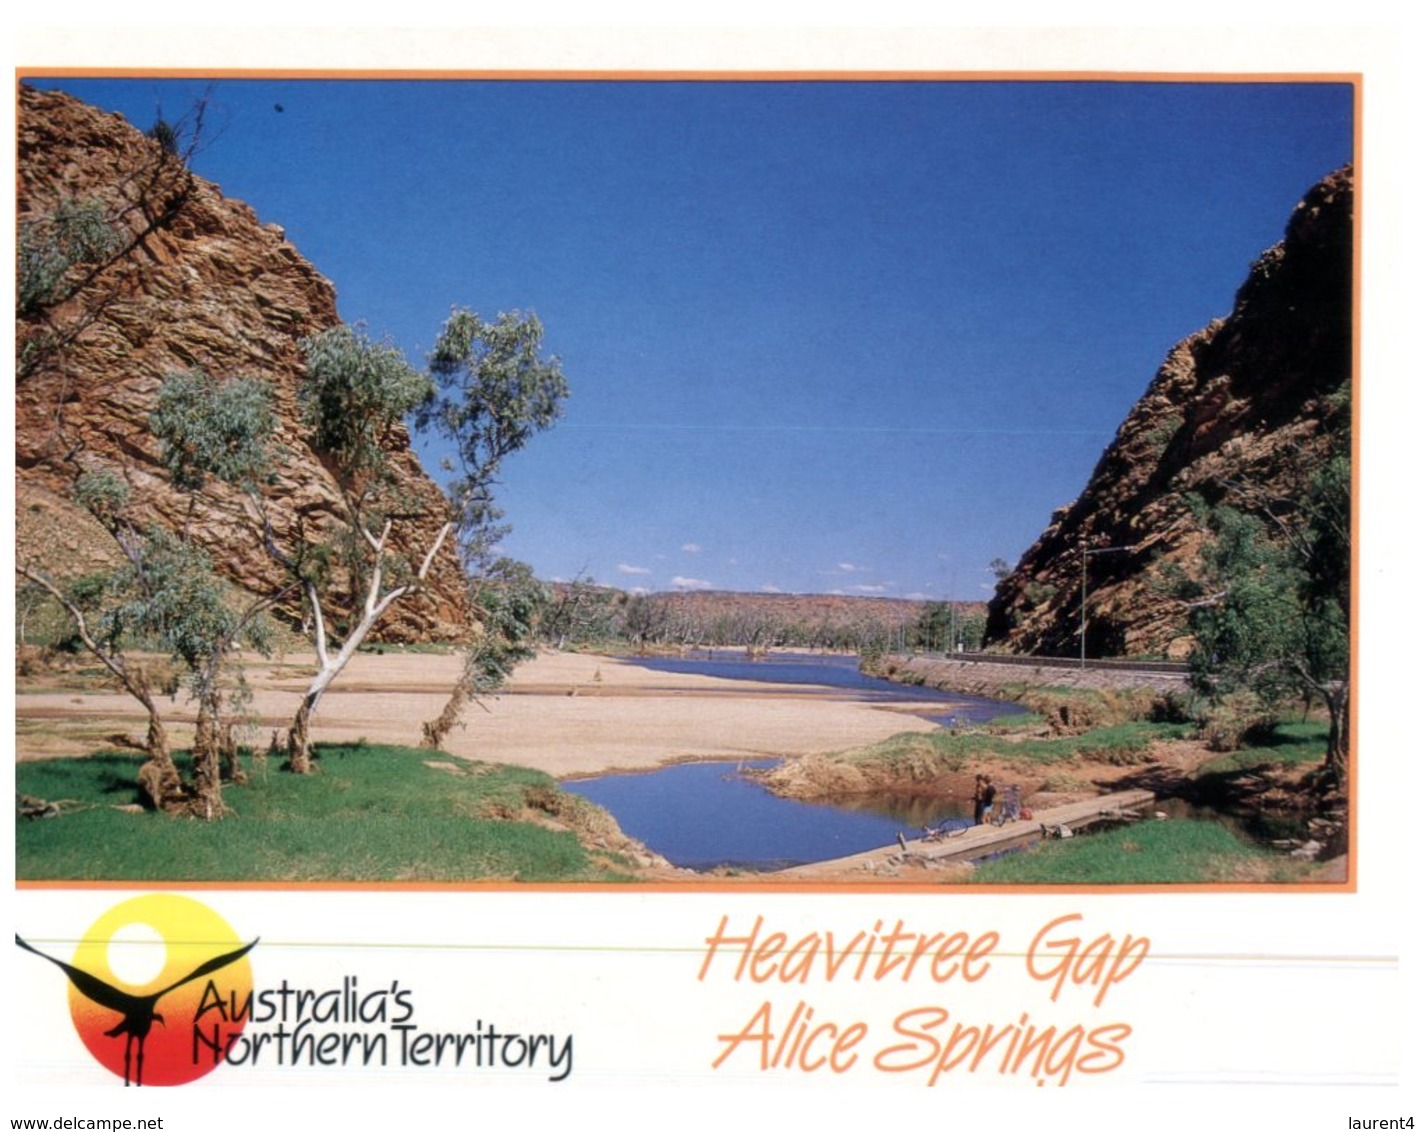 (1000) Australia - NT -  Alice Springs Heavetree Gap - Alice Springs